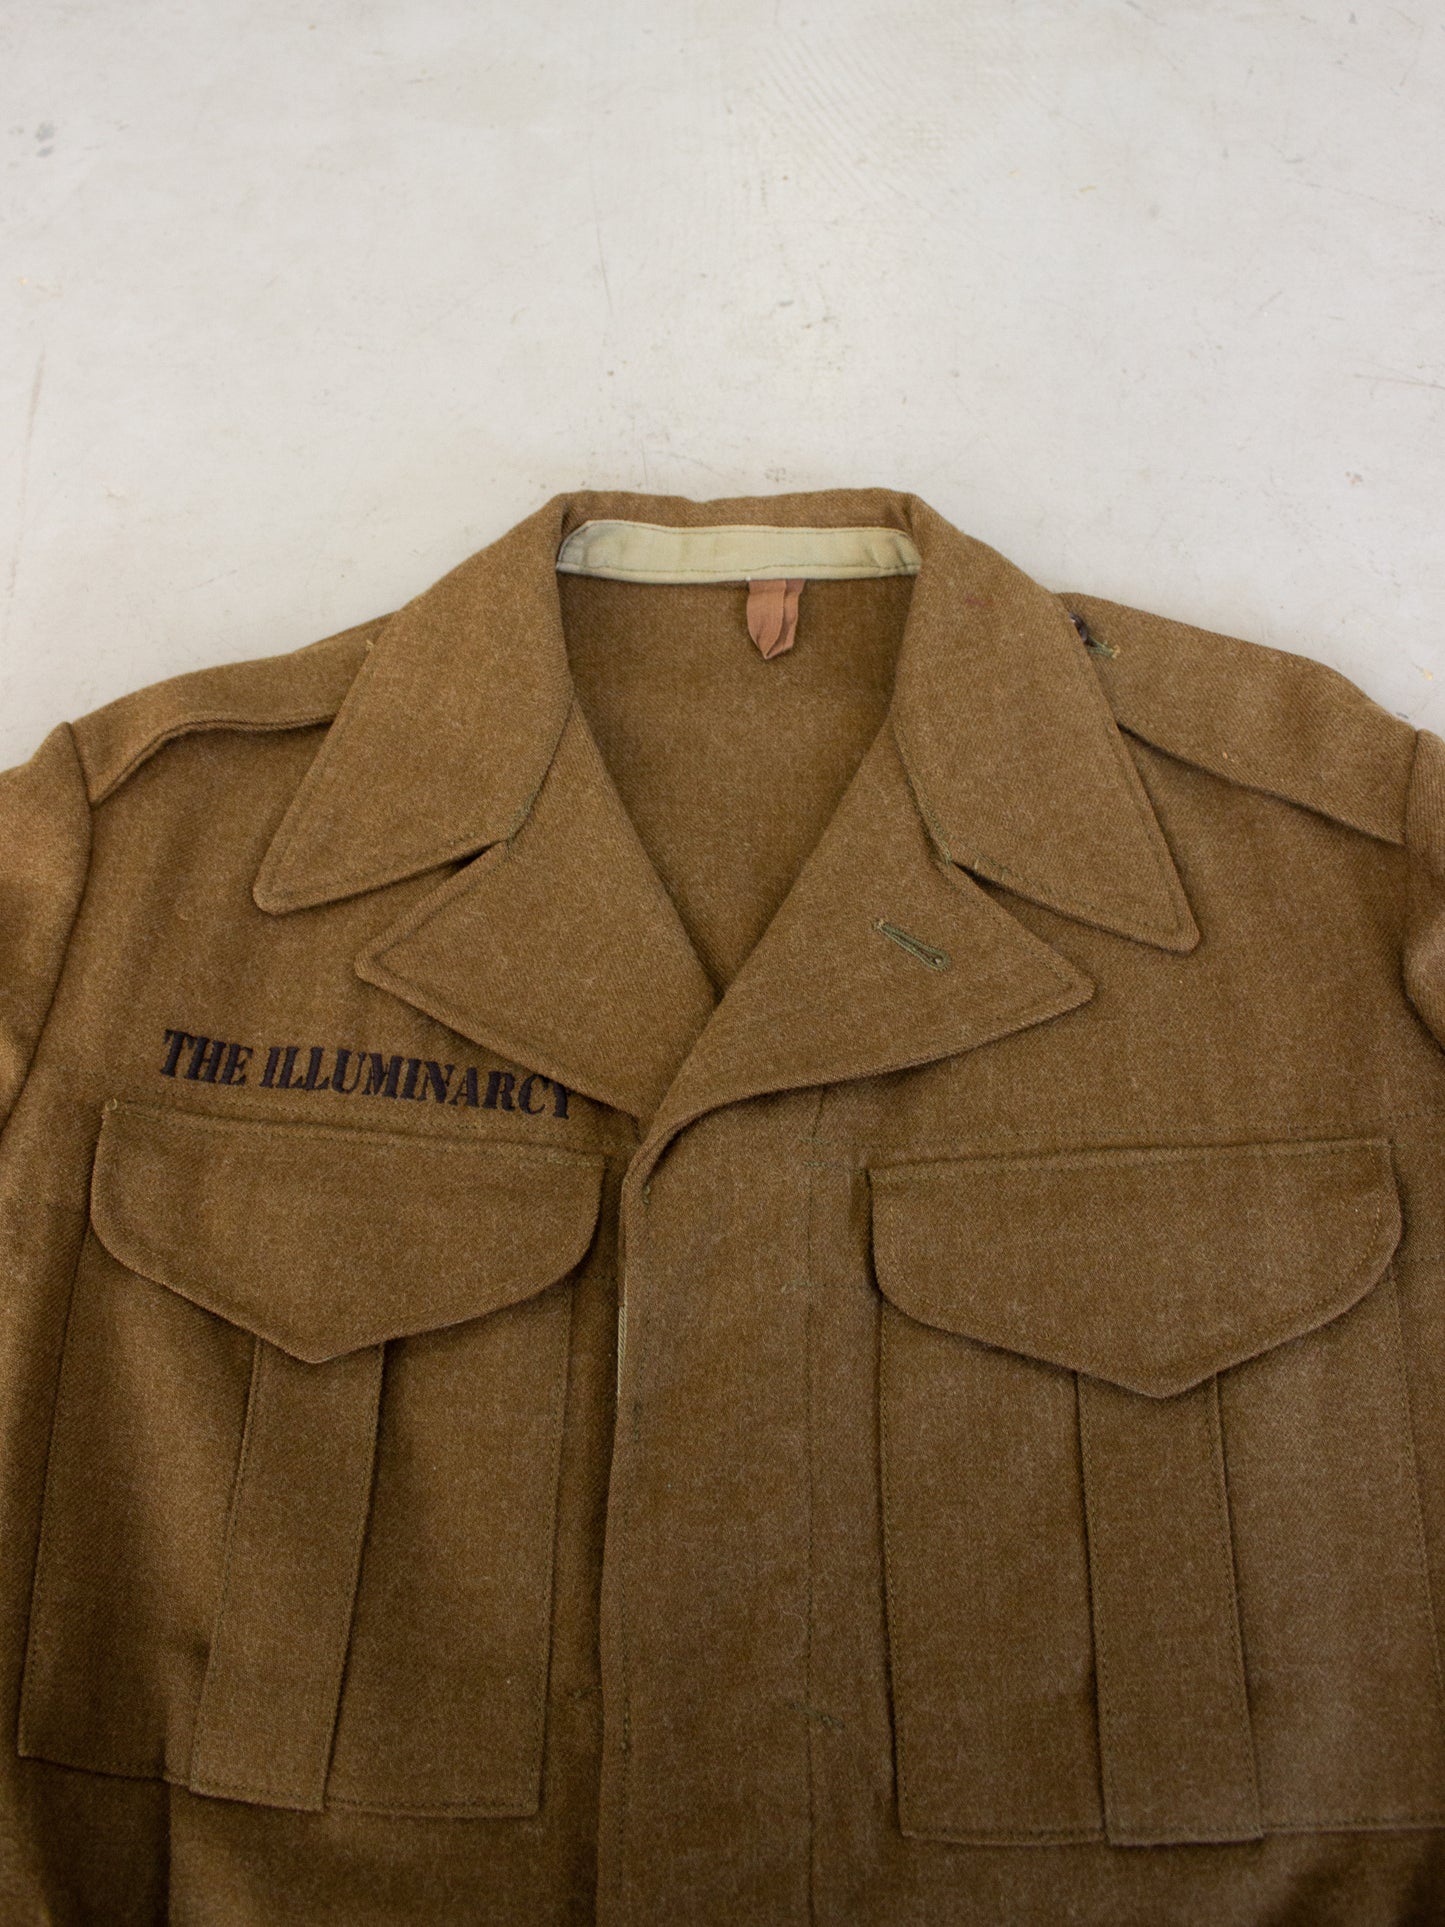 1952 Australian Army Wool Blouson Jacket by Bishop & Woodward Pty Ltd (Medium)